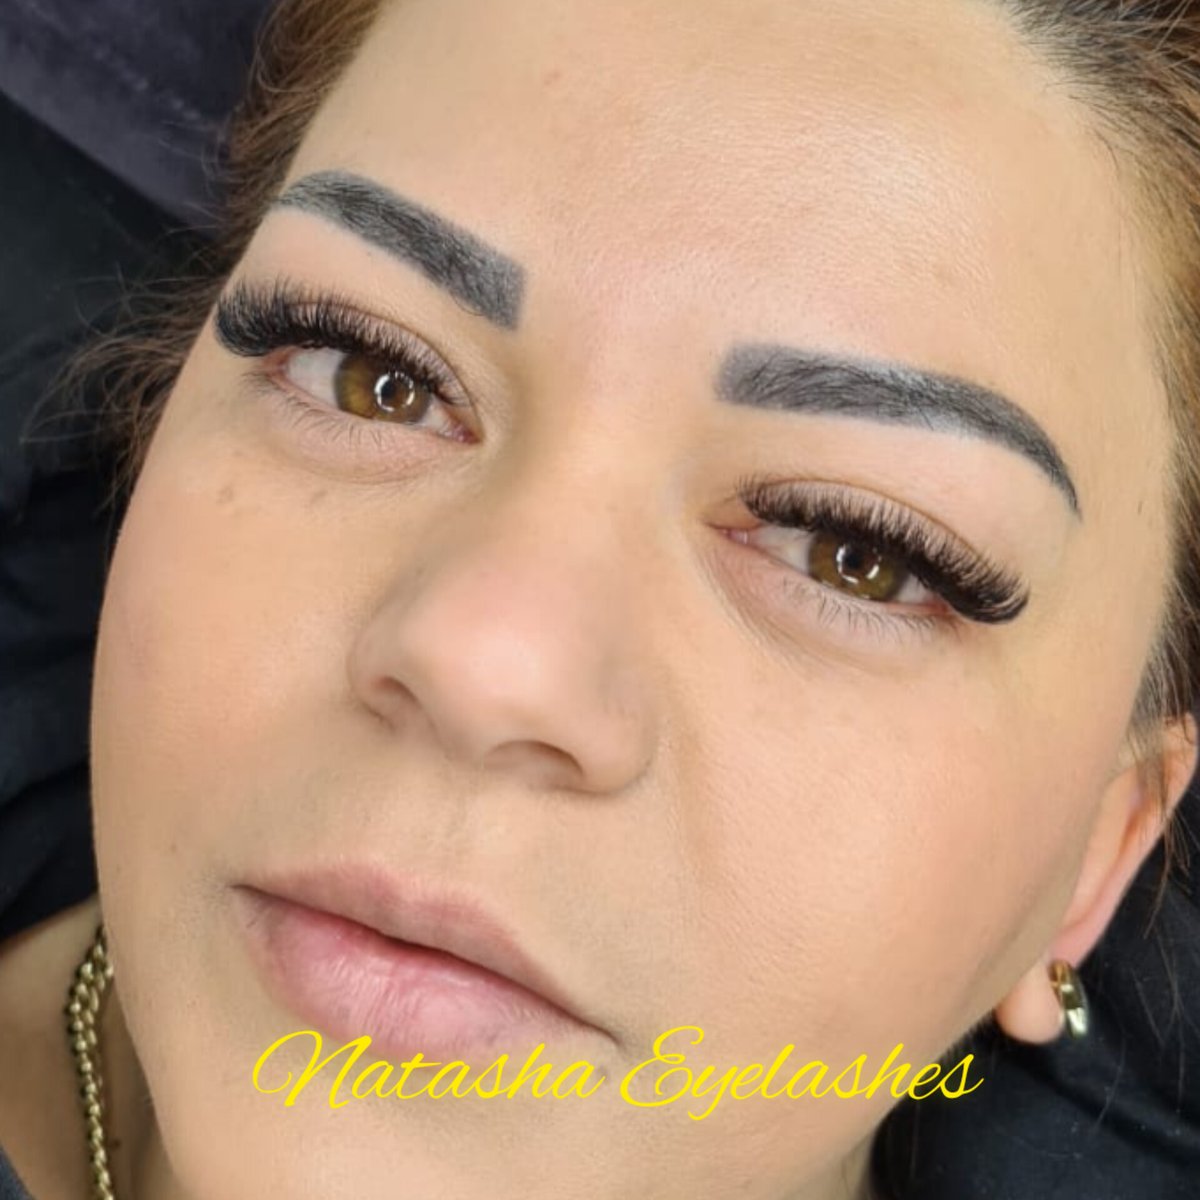 #extensiigene #extensiidegene #lashes #lashextensions #eyes #brows #gene  #genebucurești #laminare #laminaregene #cursgenevitan #cursgene #genefircufir #genevitan #genefalse #extension #lashes #eyelashes #bestlashes